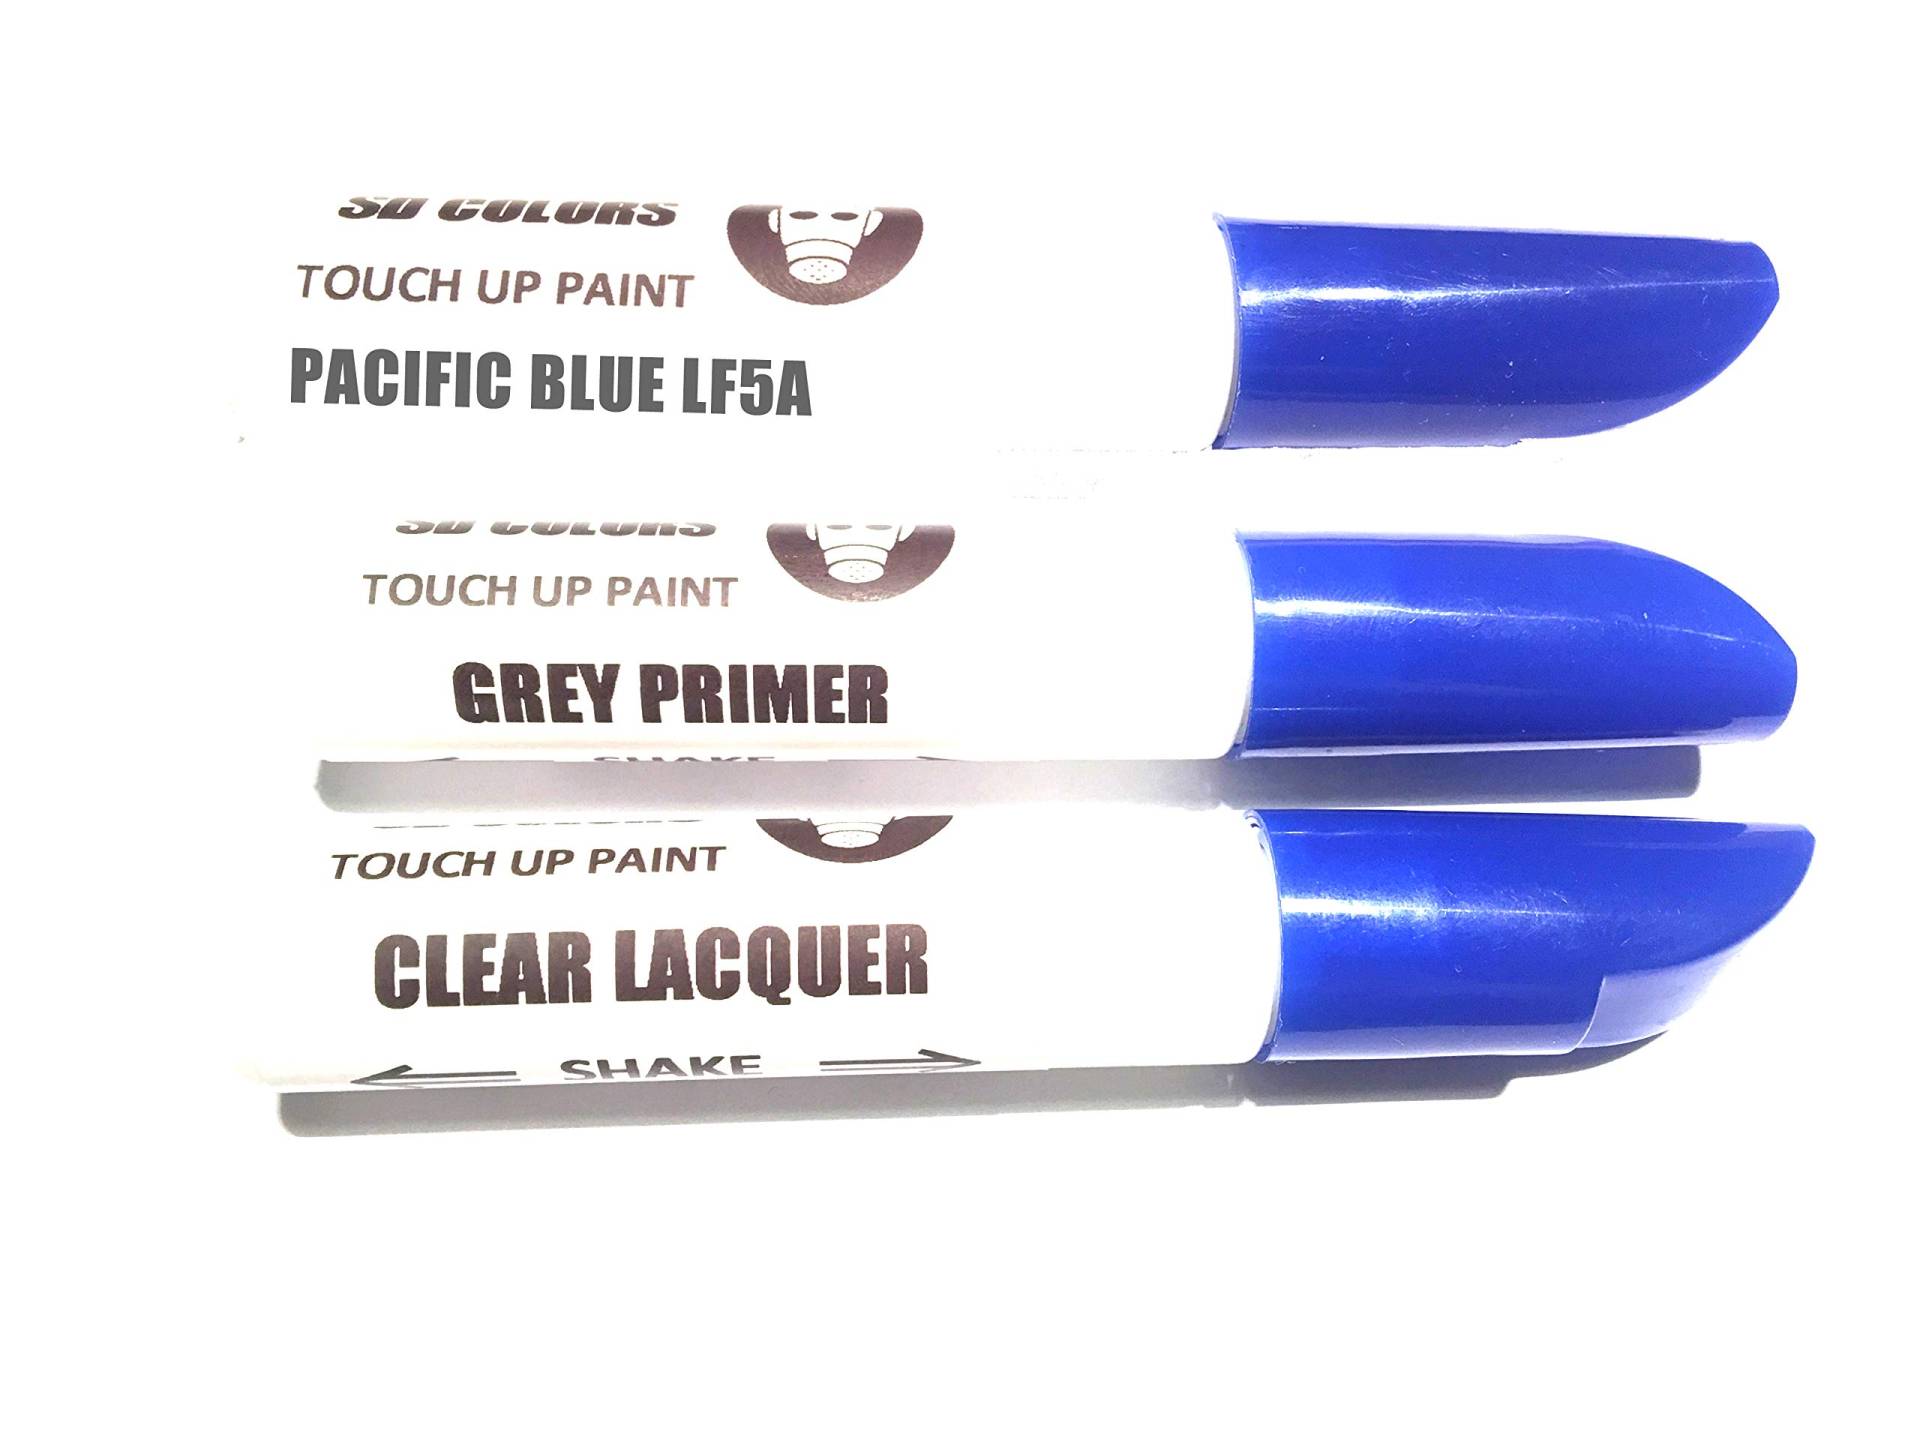 SD COLORS Pacific Blue LF5A Lackstift-Reparatur-Set, 12 ml, mit Pinsel, Farbcode LF5A Pacific Blue (Lack + Grundierung + Lack) von SD COLORS